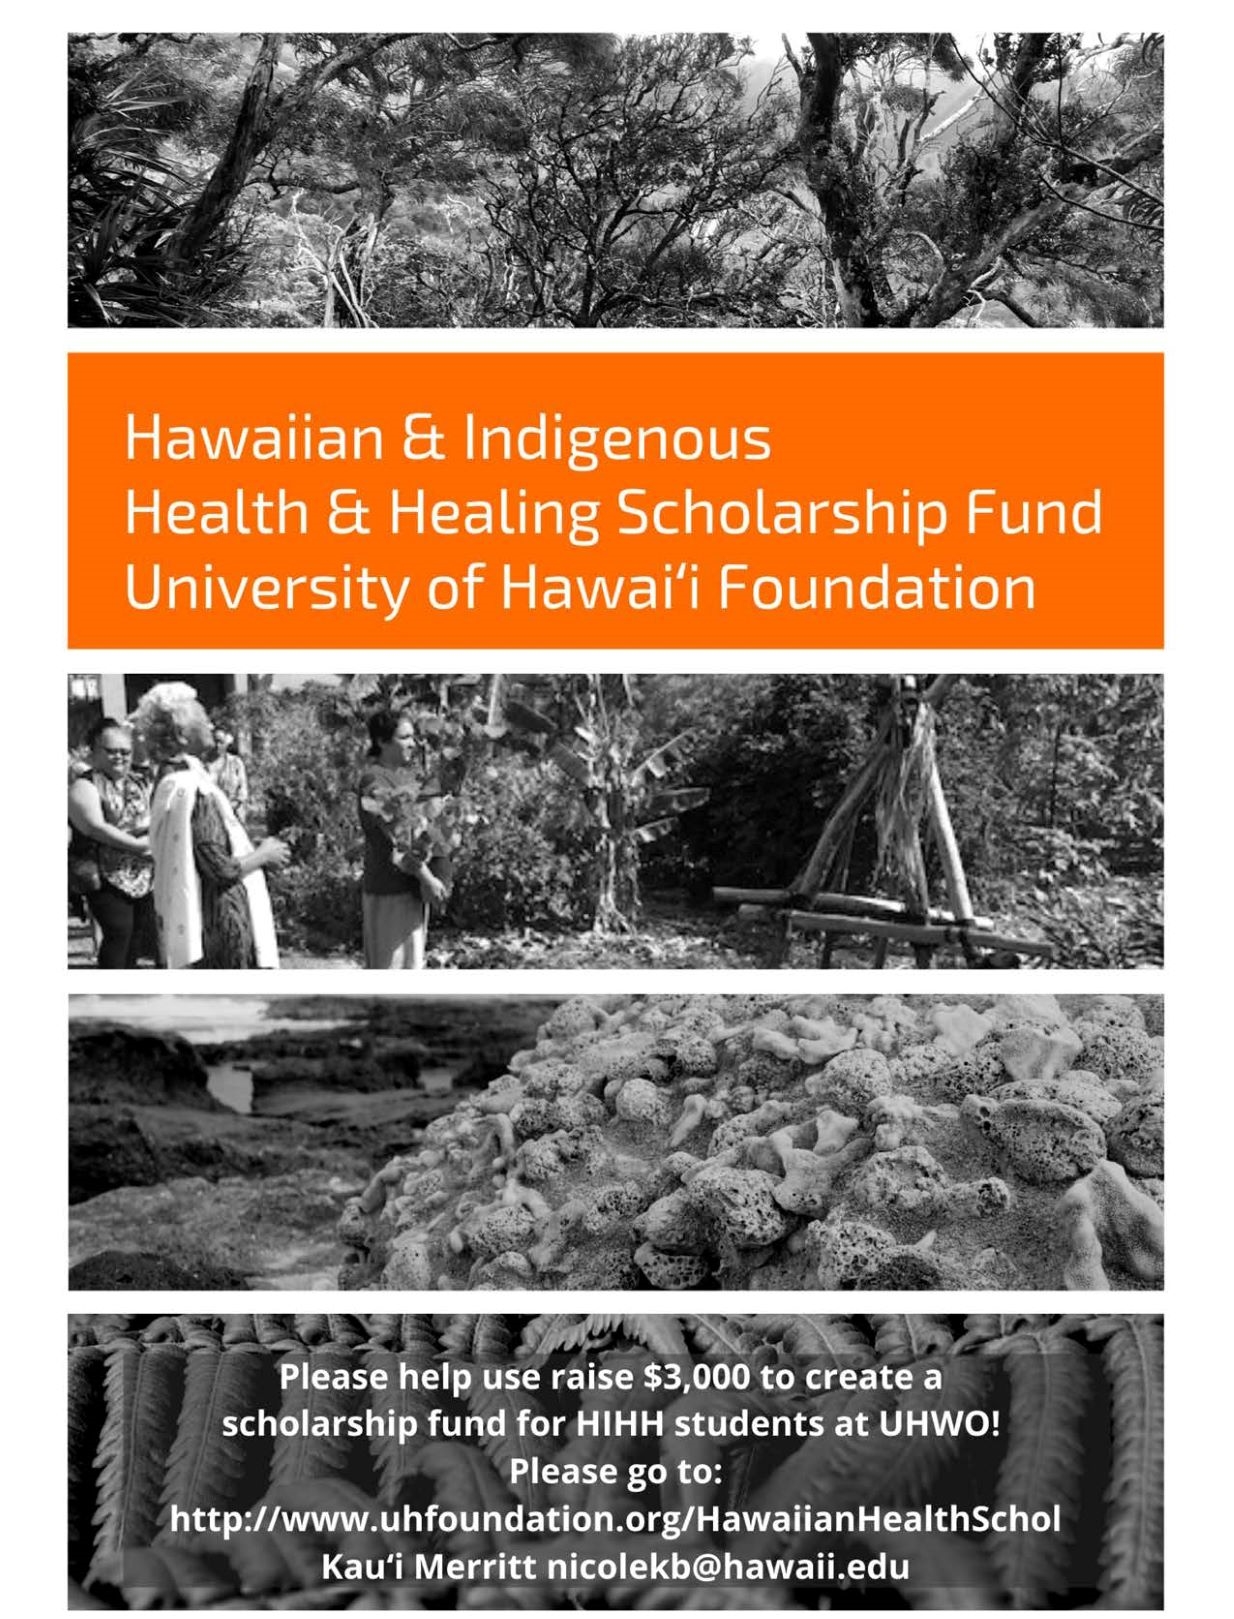 Hawaiian & Indigenous Health & Healing Scholarship Fund, University of